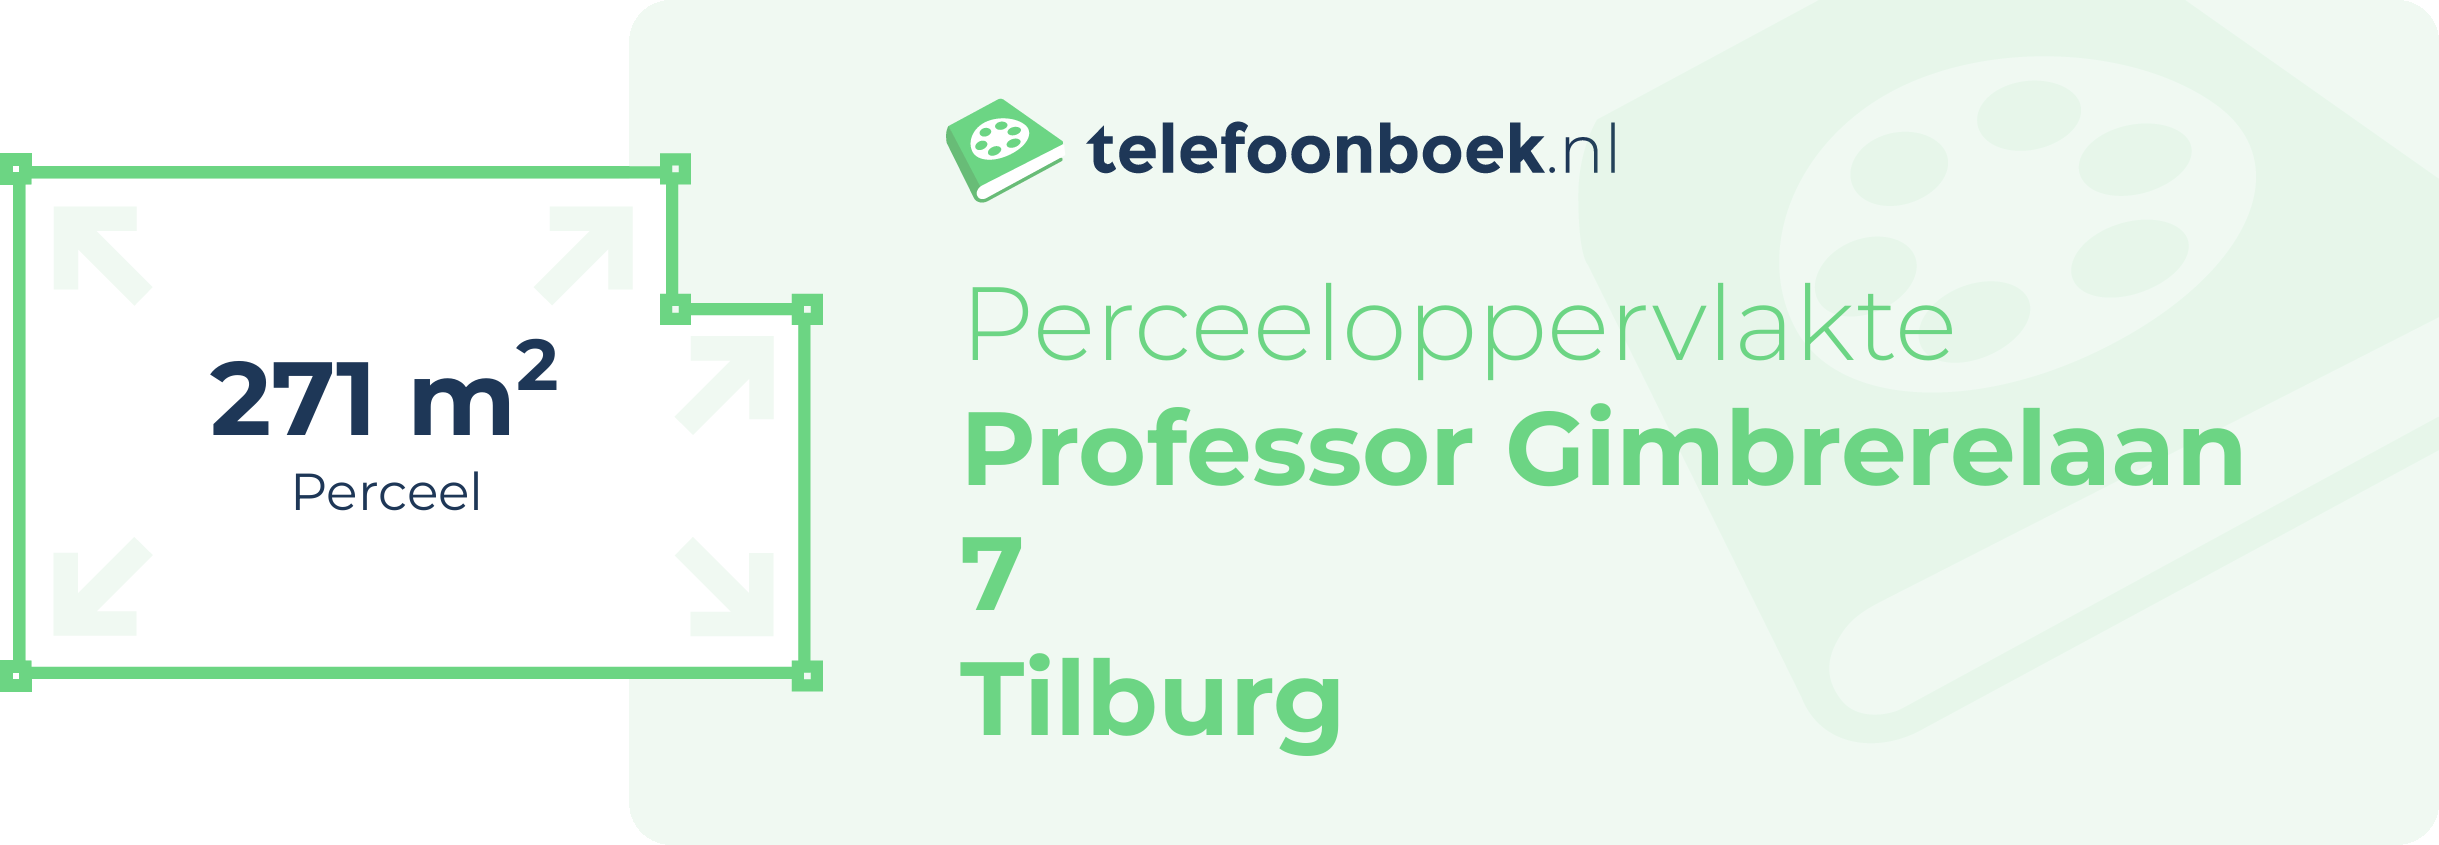 Perceeloppervlakte Professor Gimbrerelaan 7 Tilburg